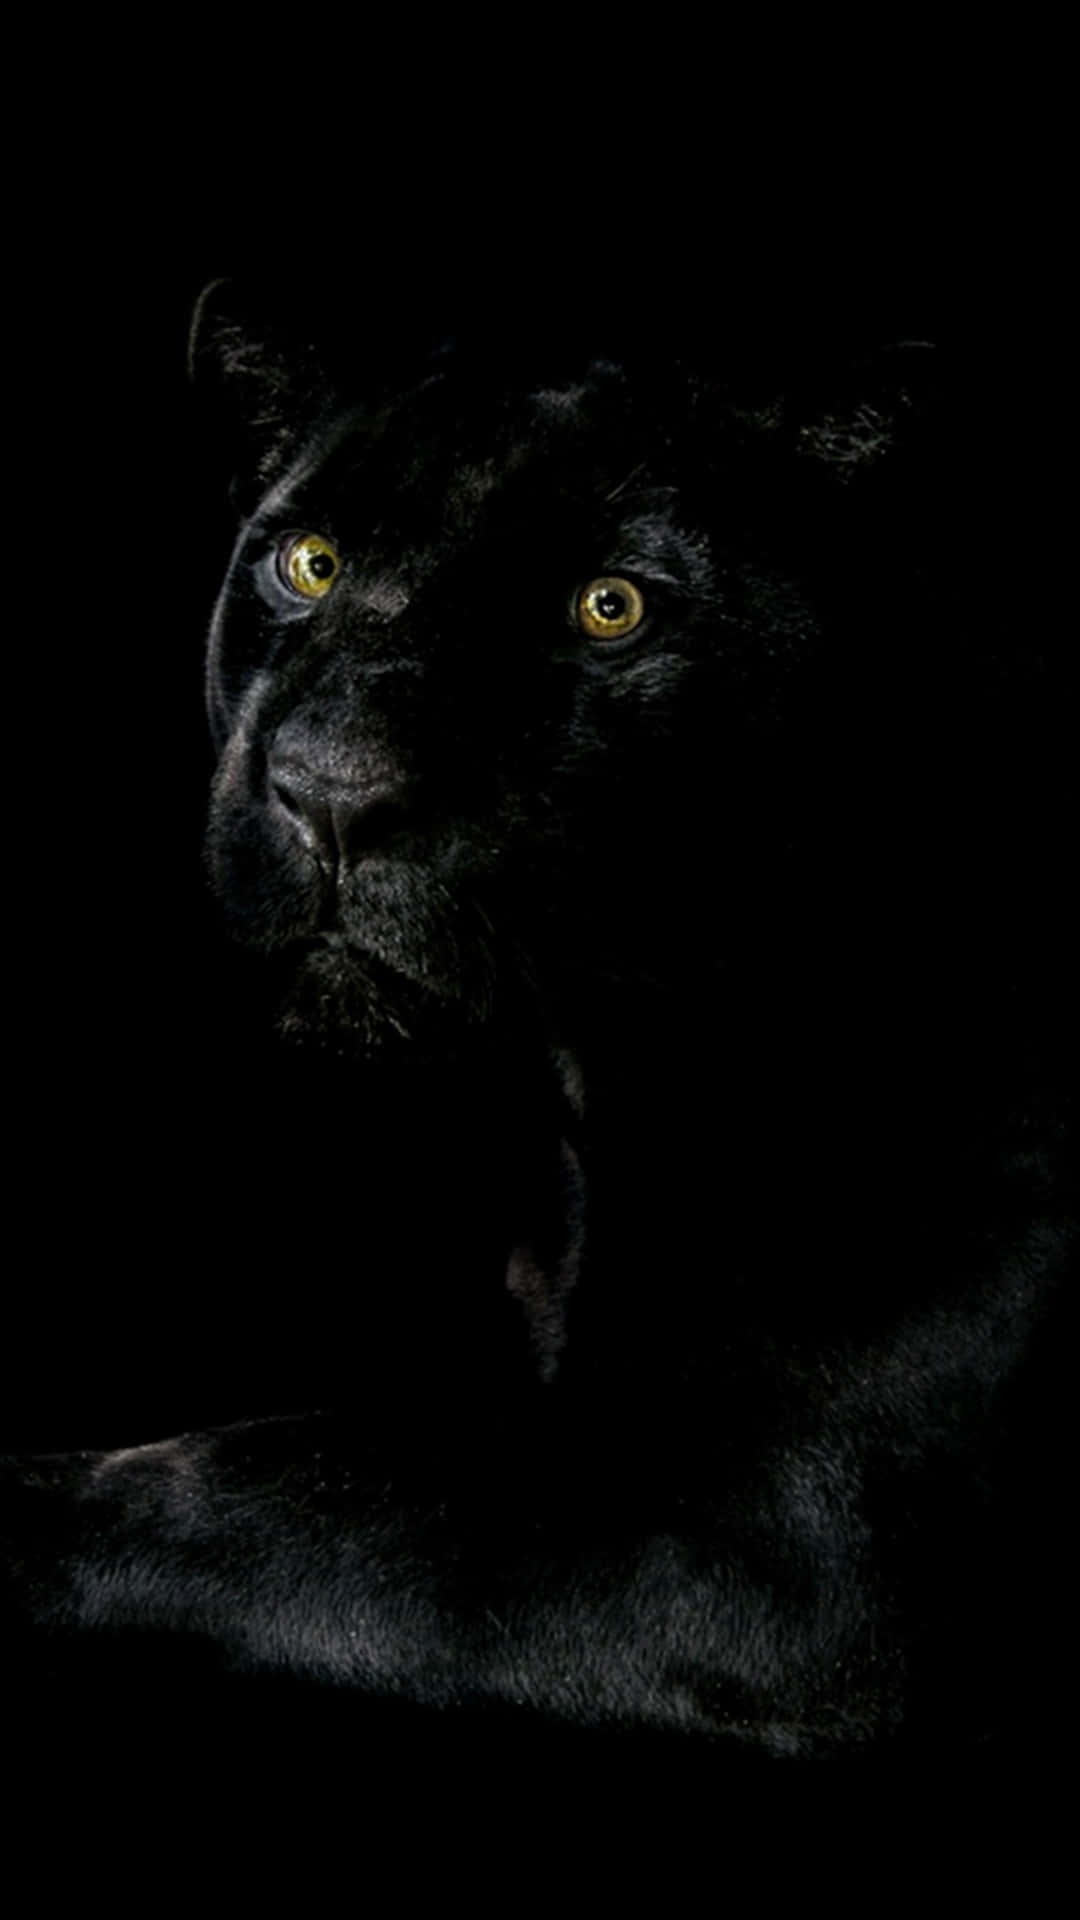 Majestic Black Jaguar In The Wild Wallpaper